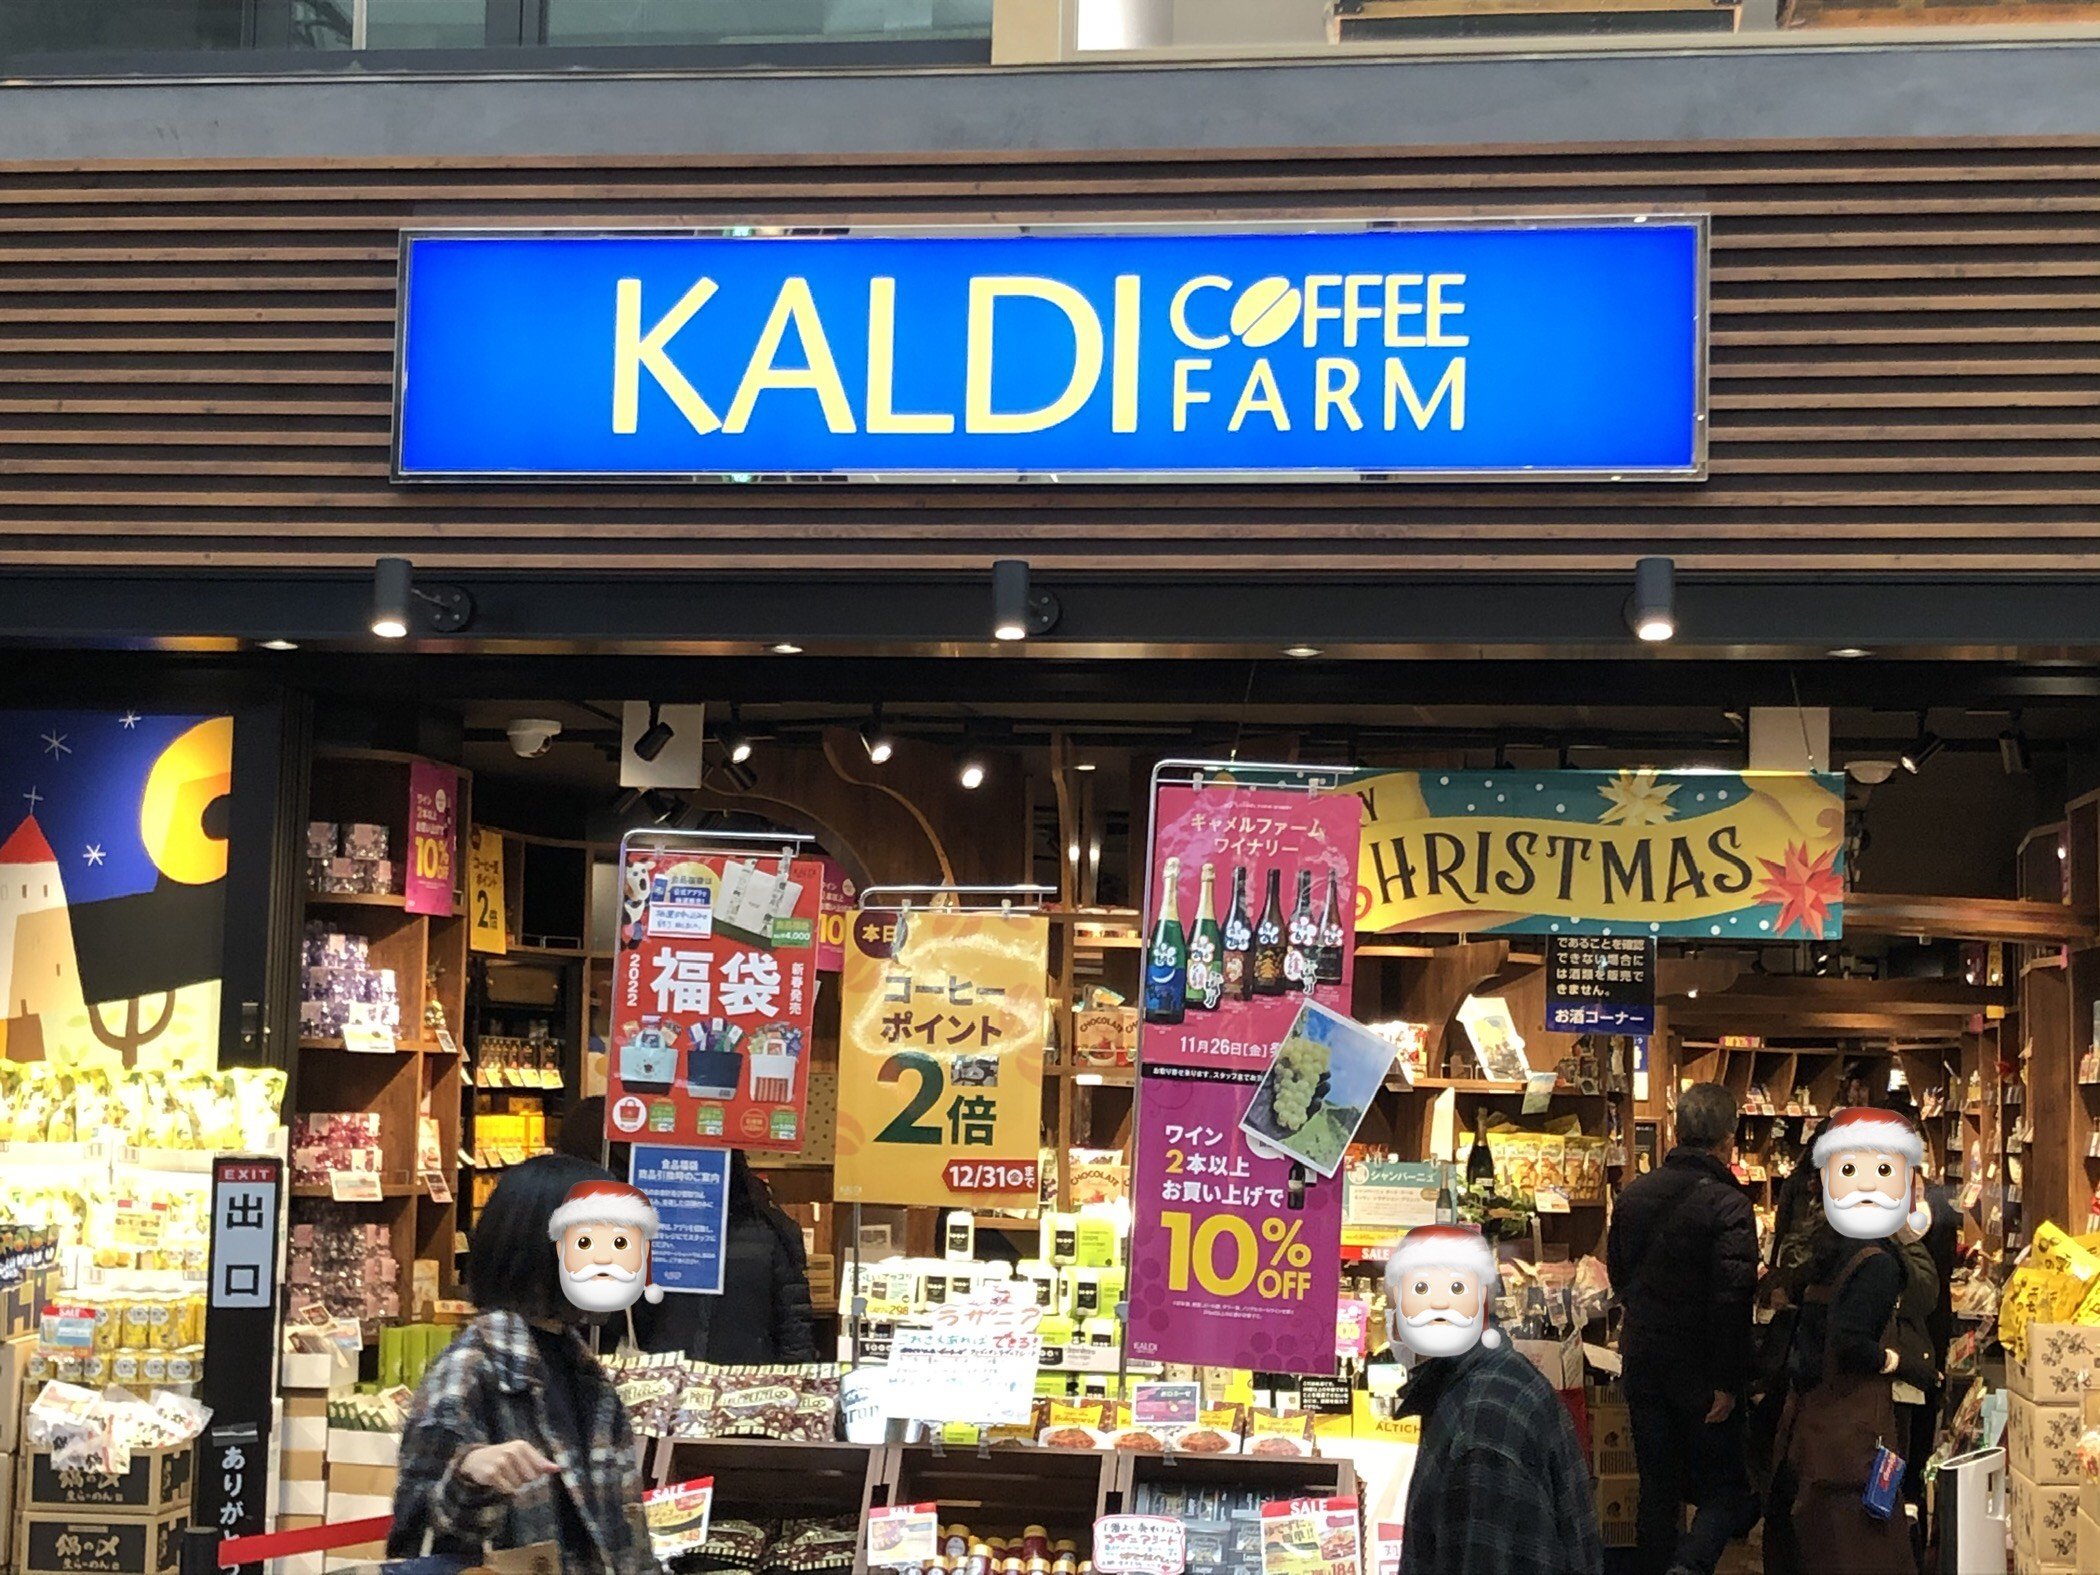 Kaldi Coffee Farm — As Seen In Japan